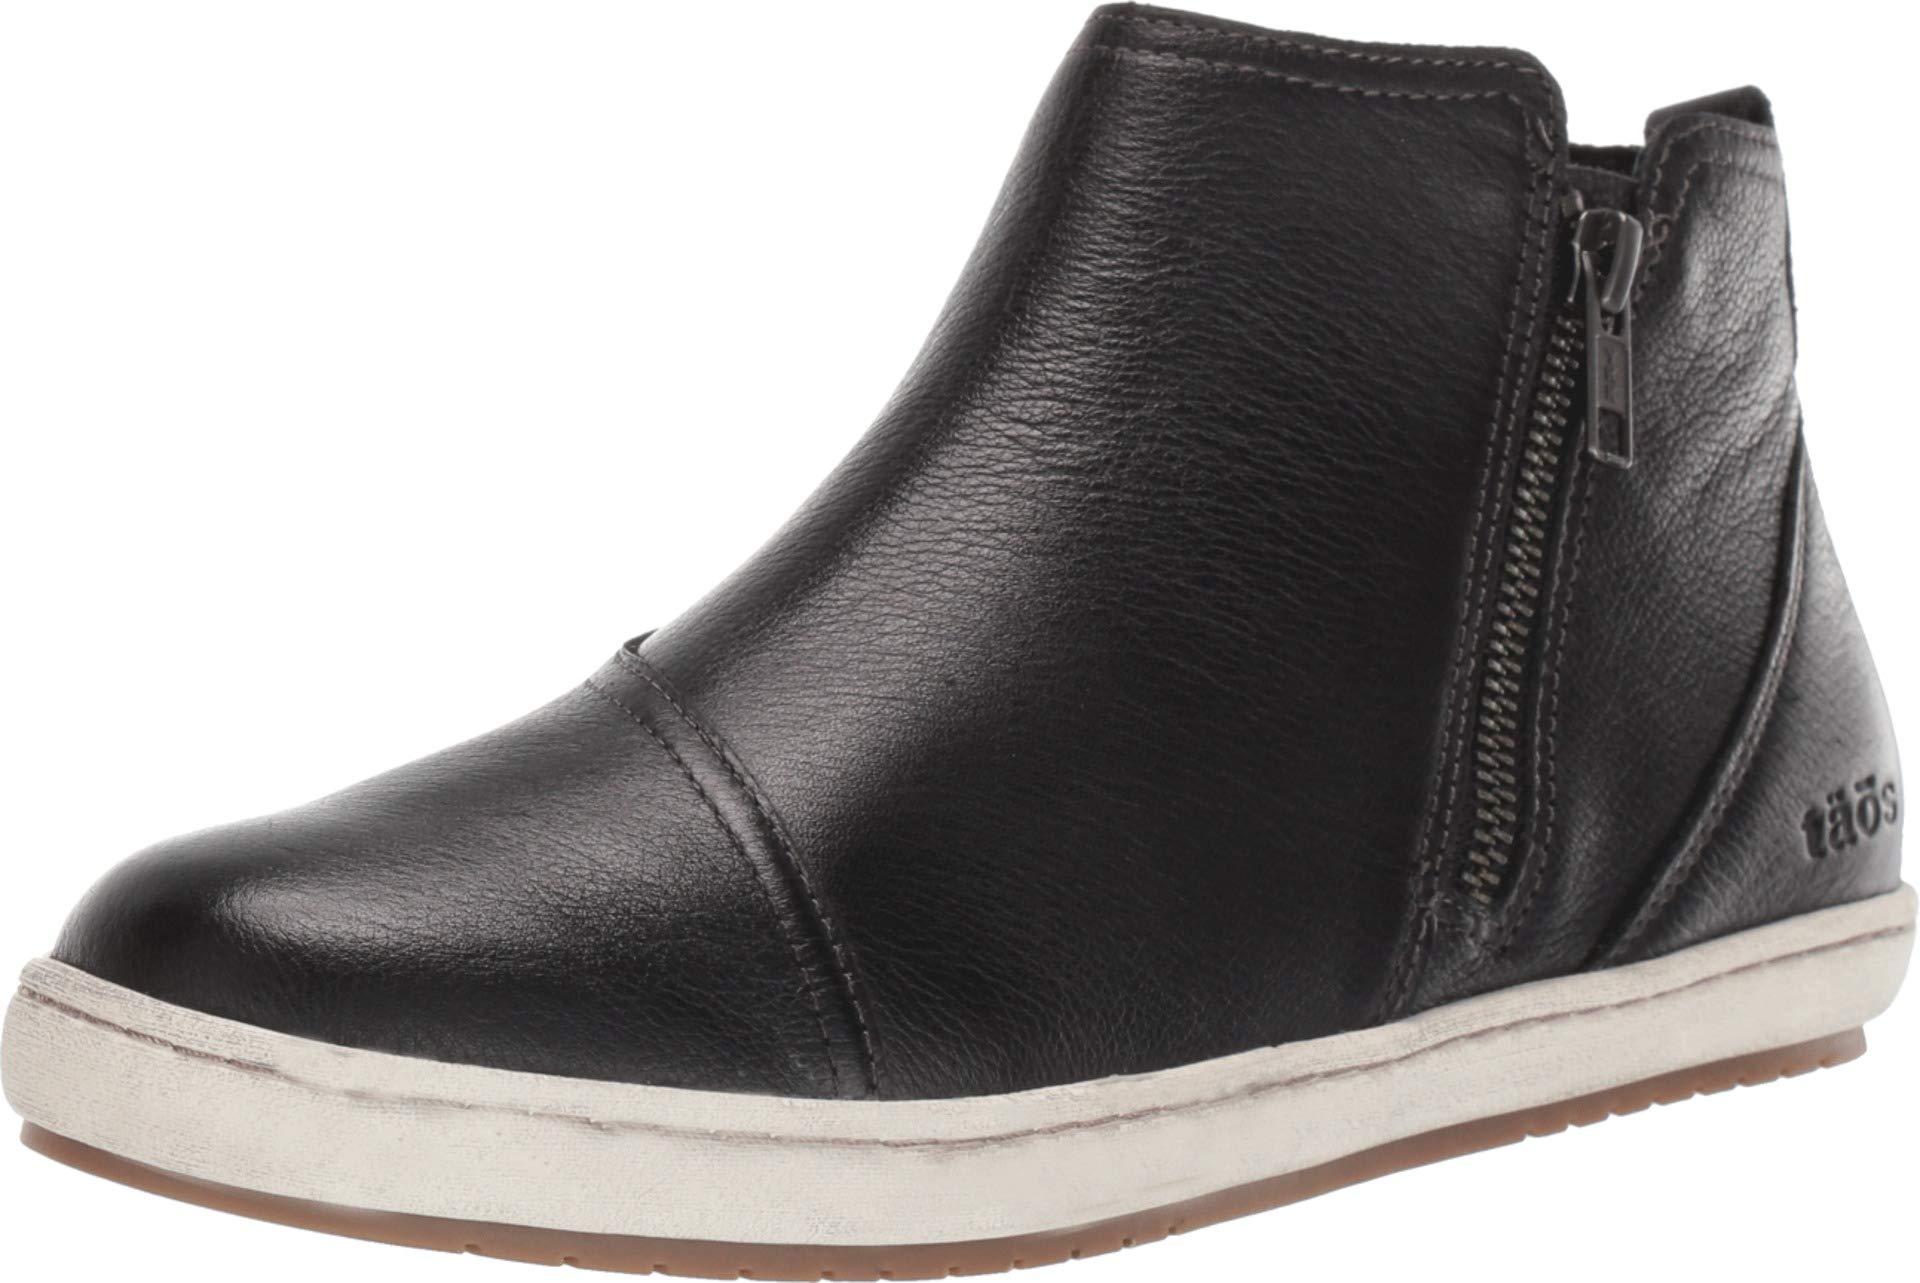 Taos Footwear Leather Bootsie in Black - Lyst